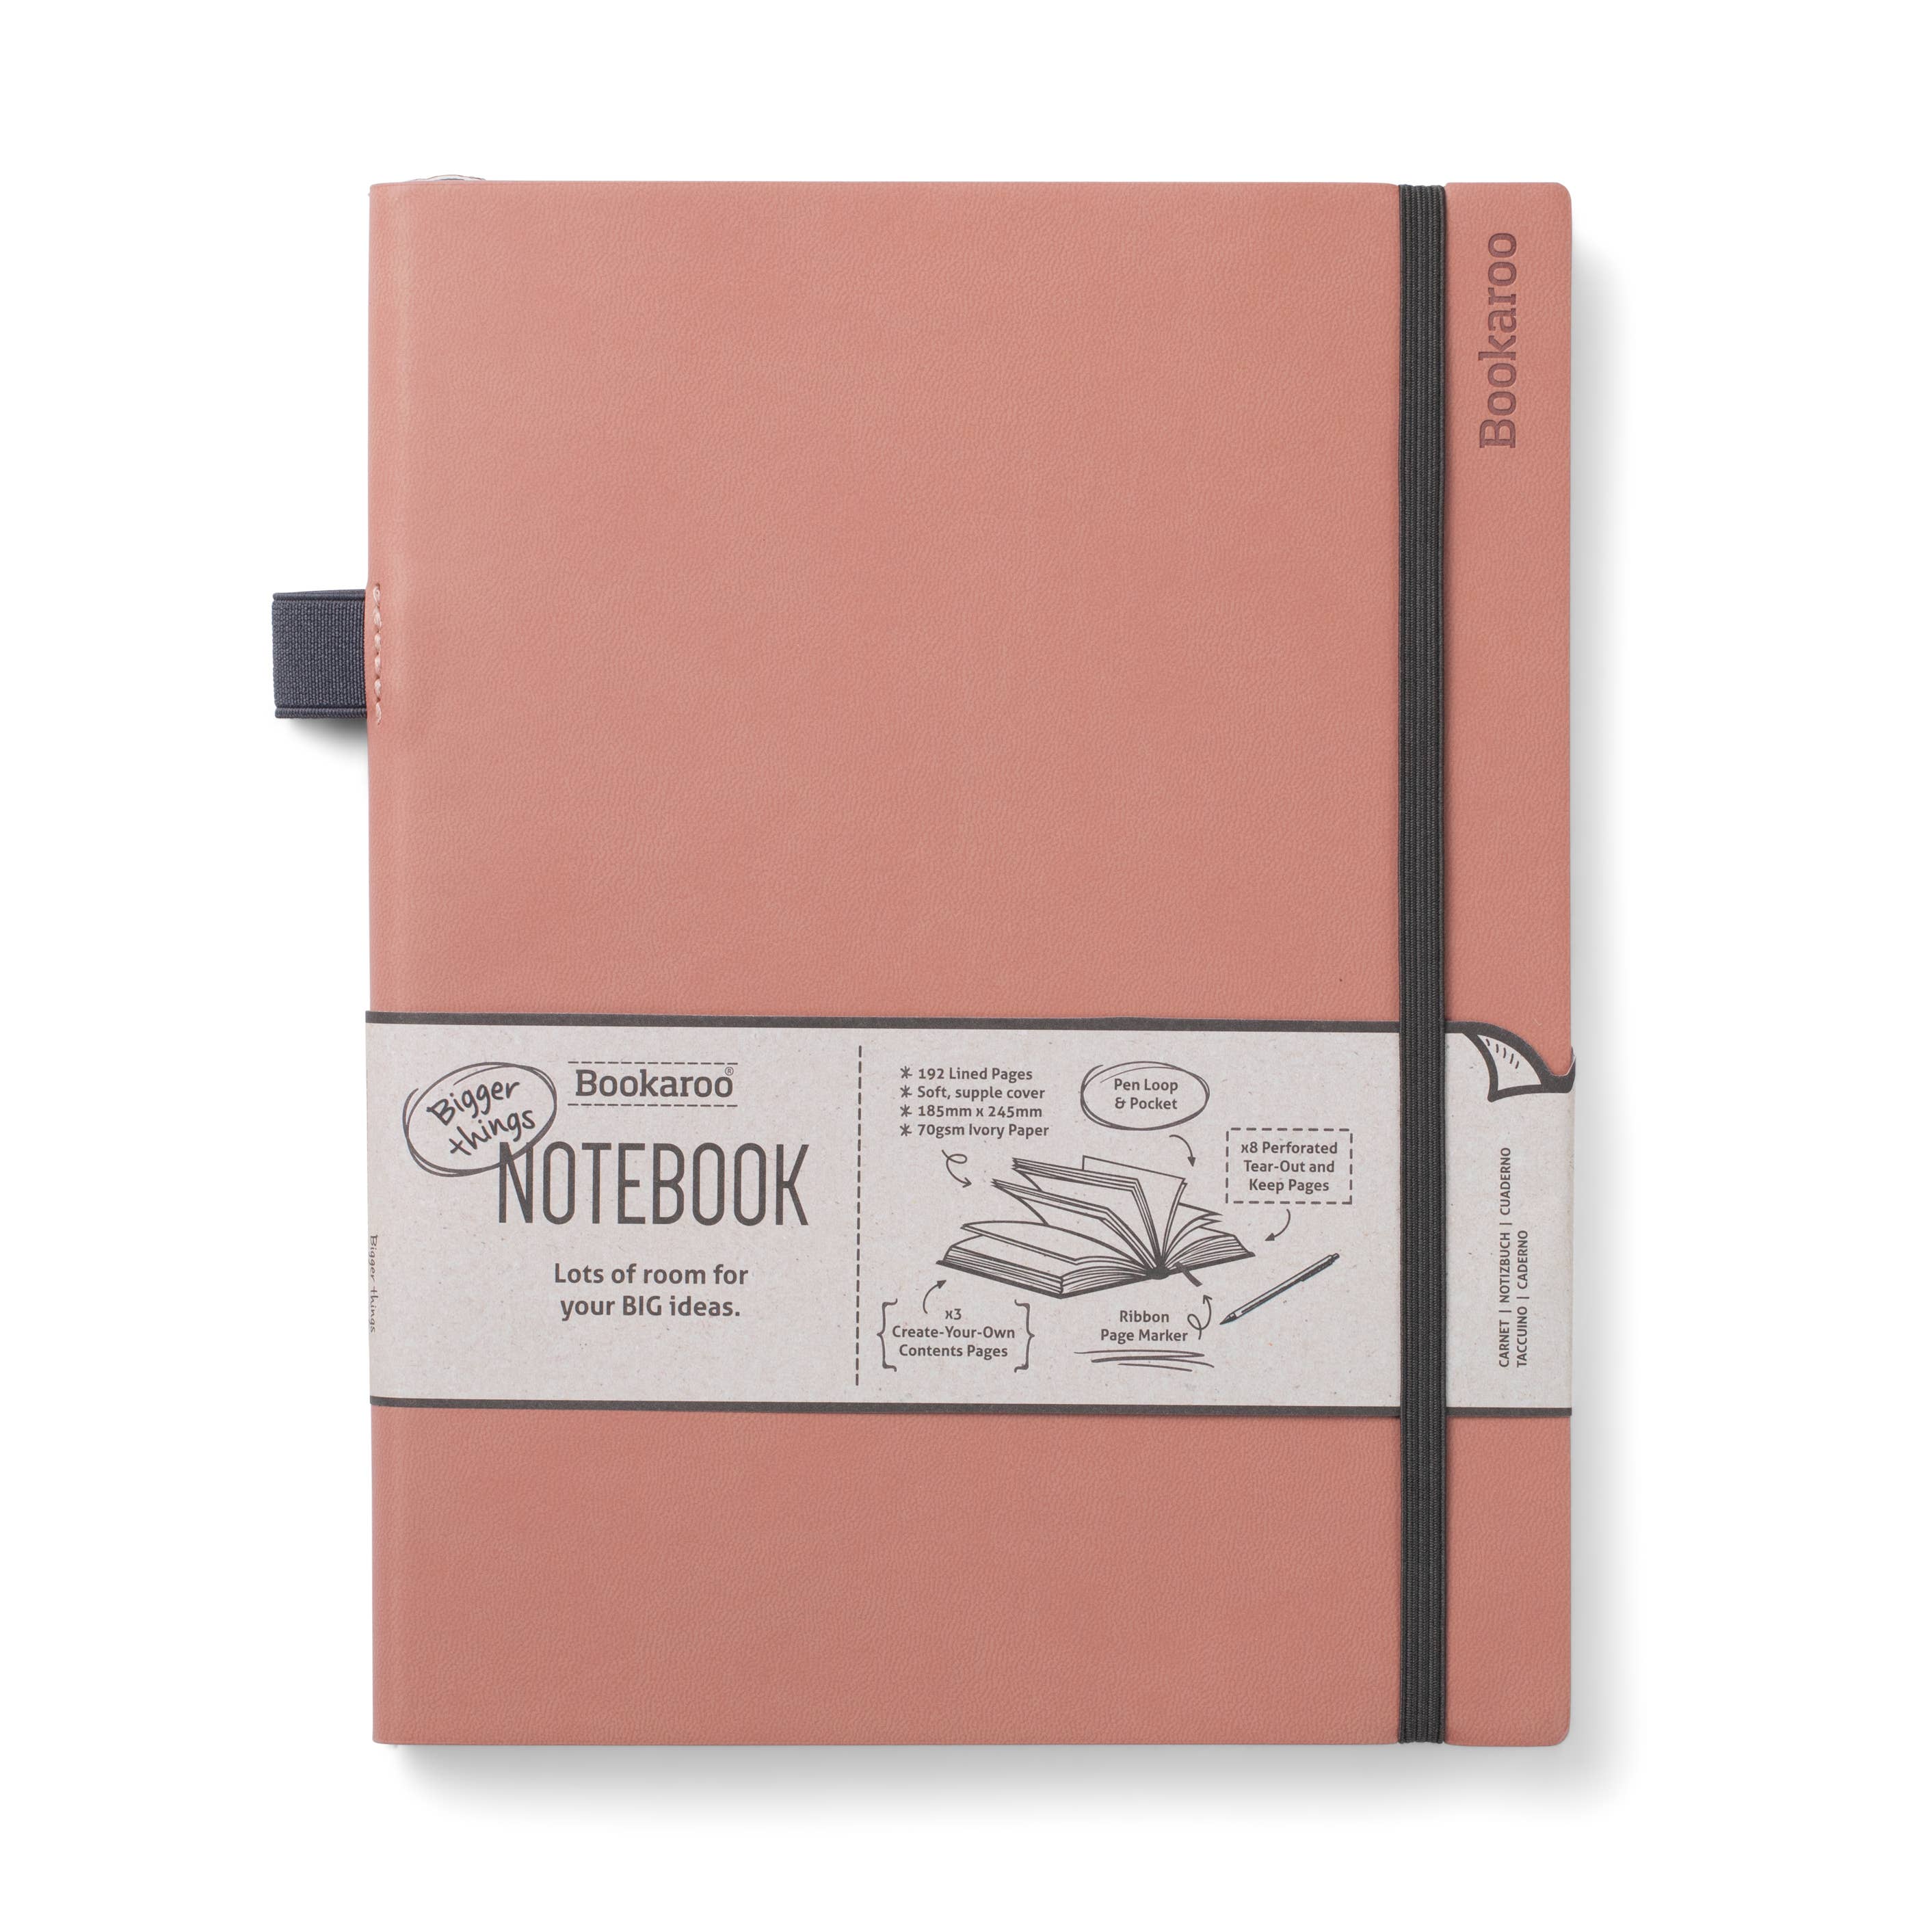 Bookaroo Bigger Things Notebook: Black